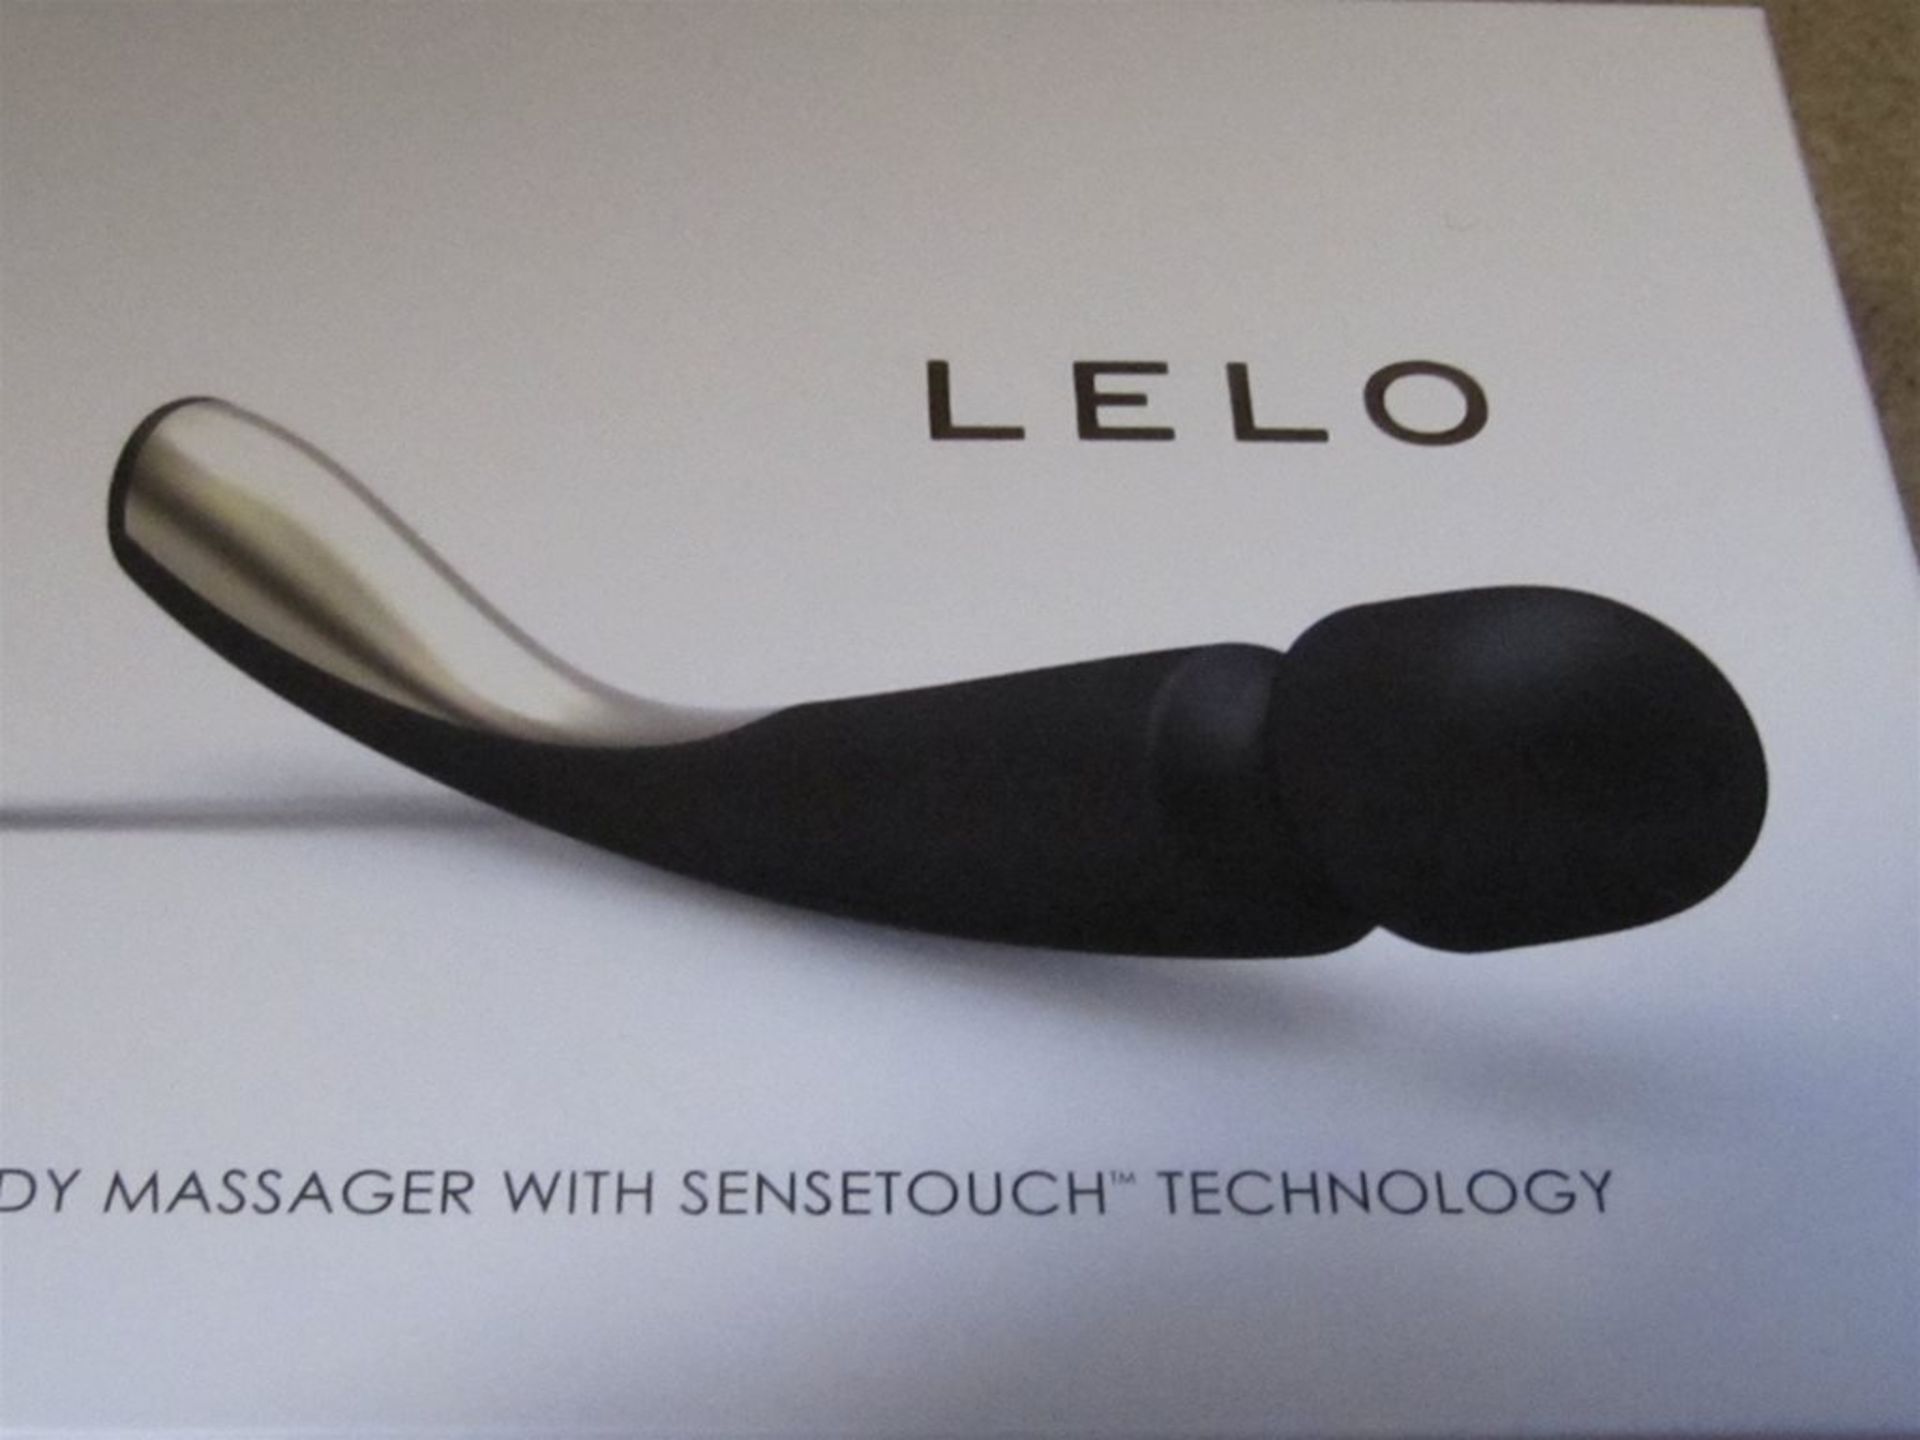 (337) Lelo Premium Body Massager. Black. No vat on Hammer, Shipping available. - Image 2 of 3